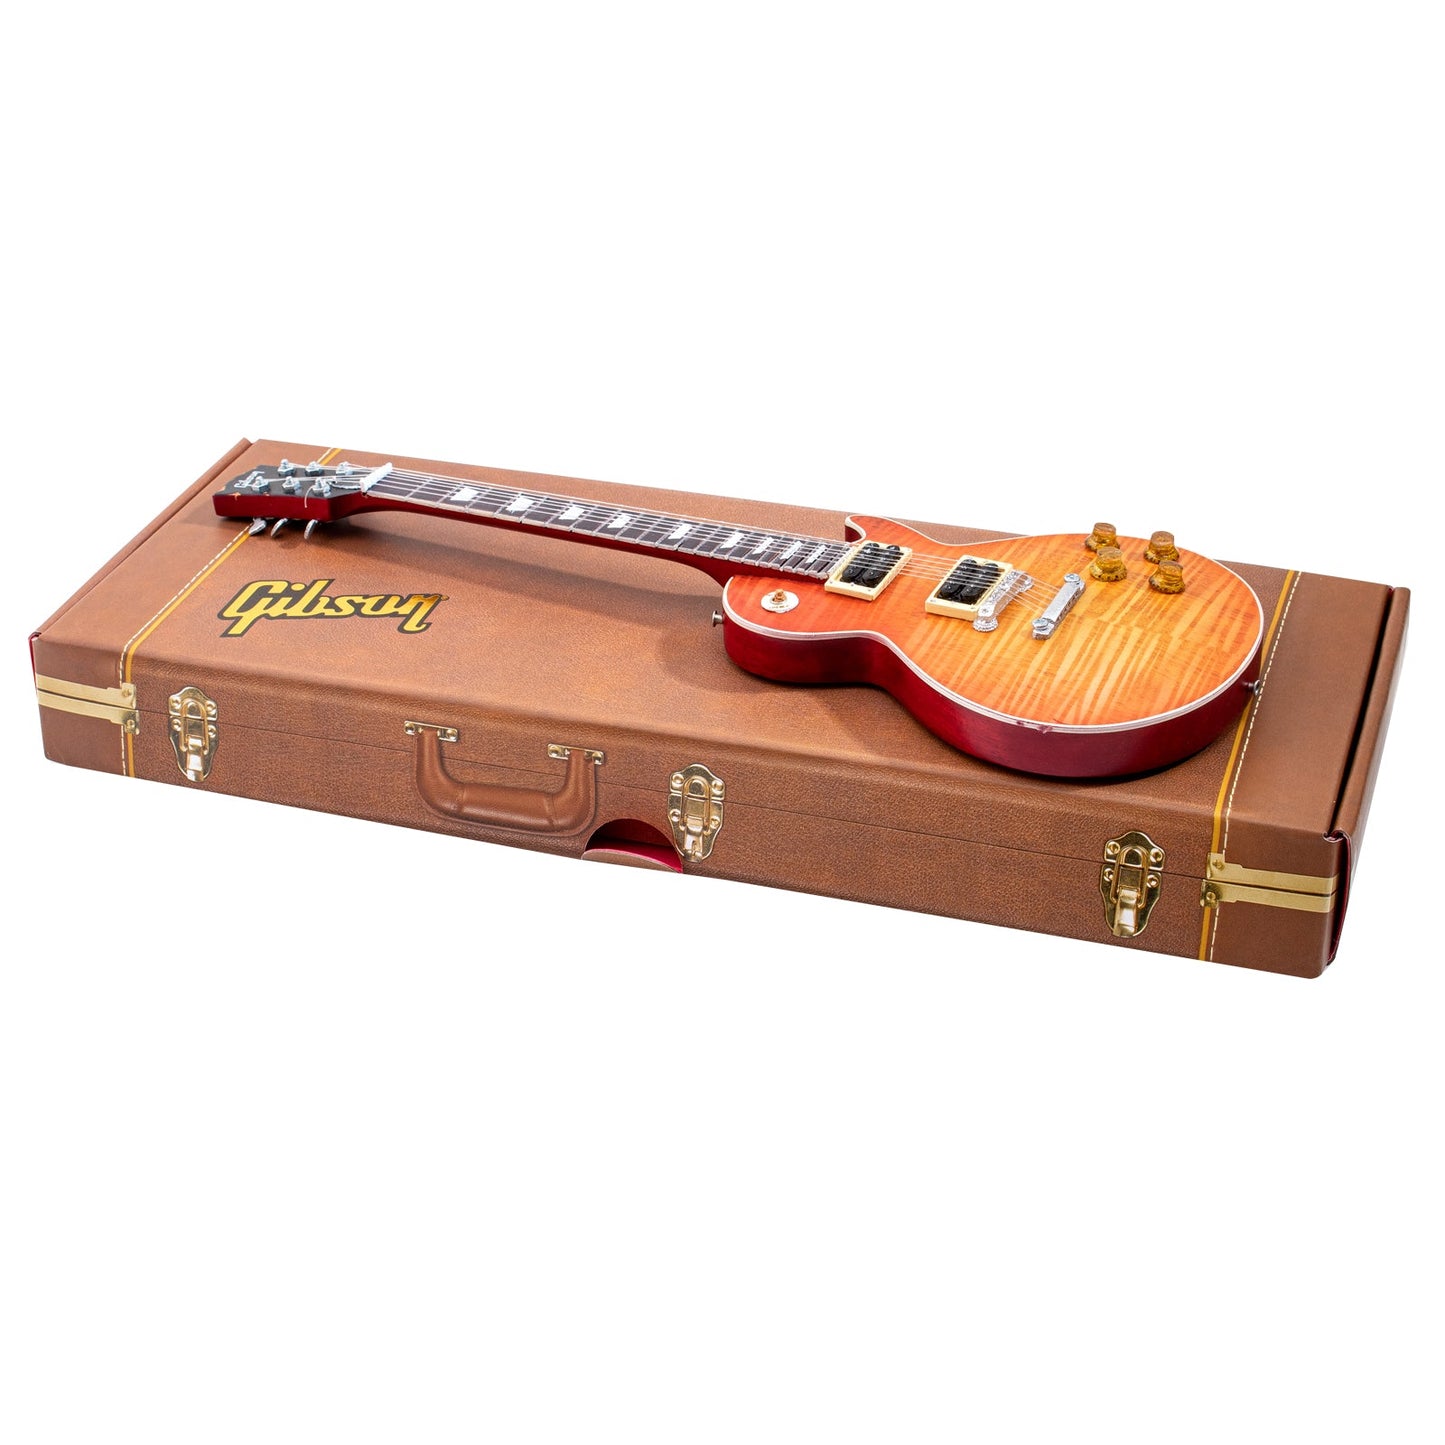 Gibson 1959 Les Paul Duane Allman Cherry Sunburst 1.4 Scale Mini Guitar Model